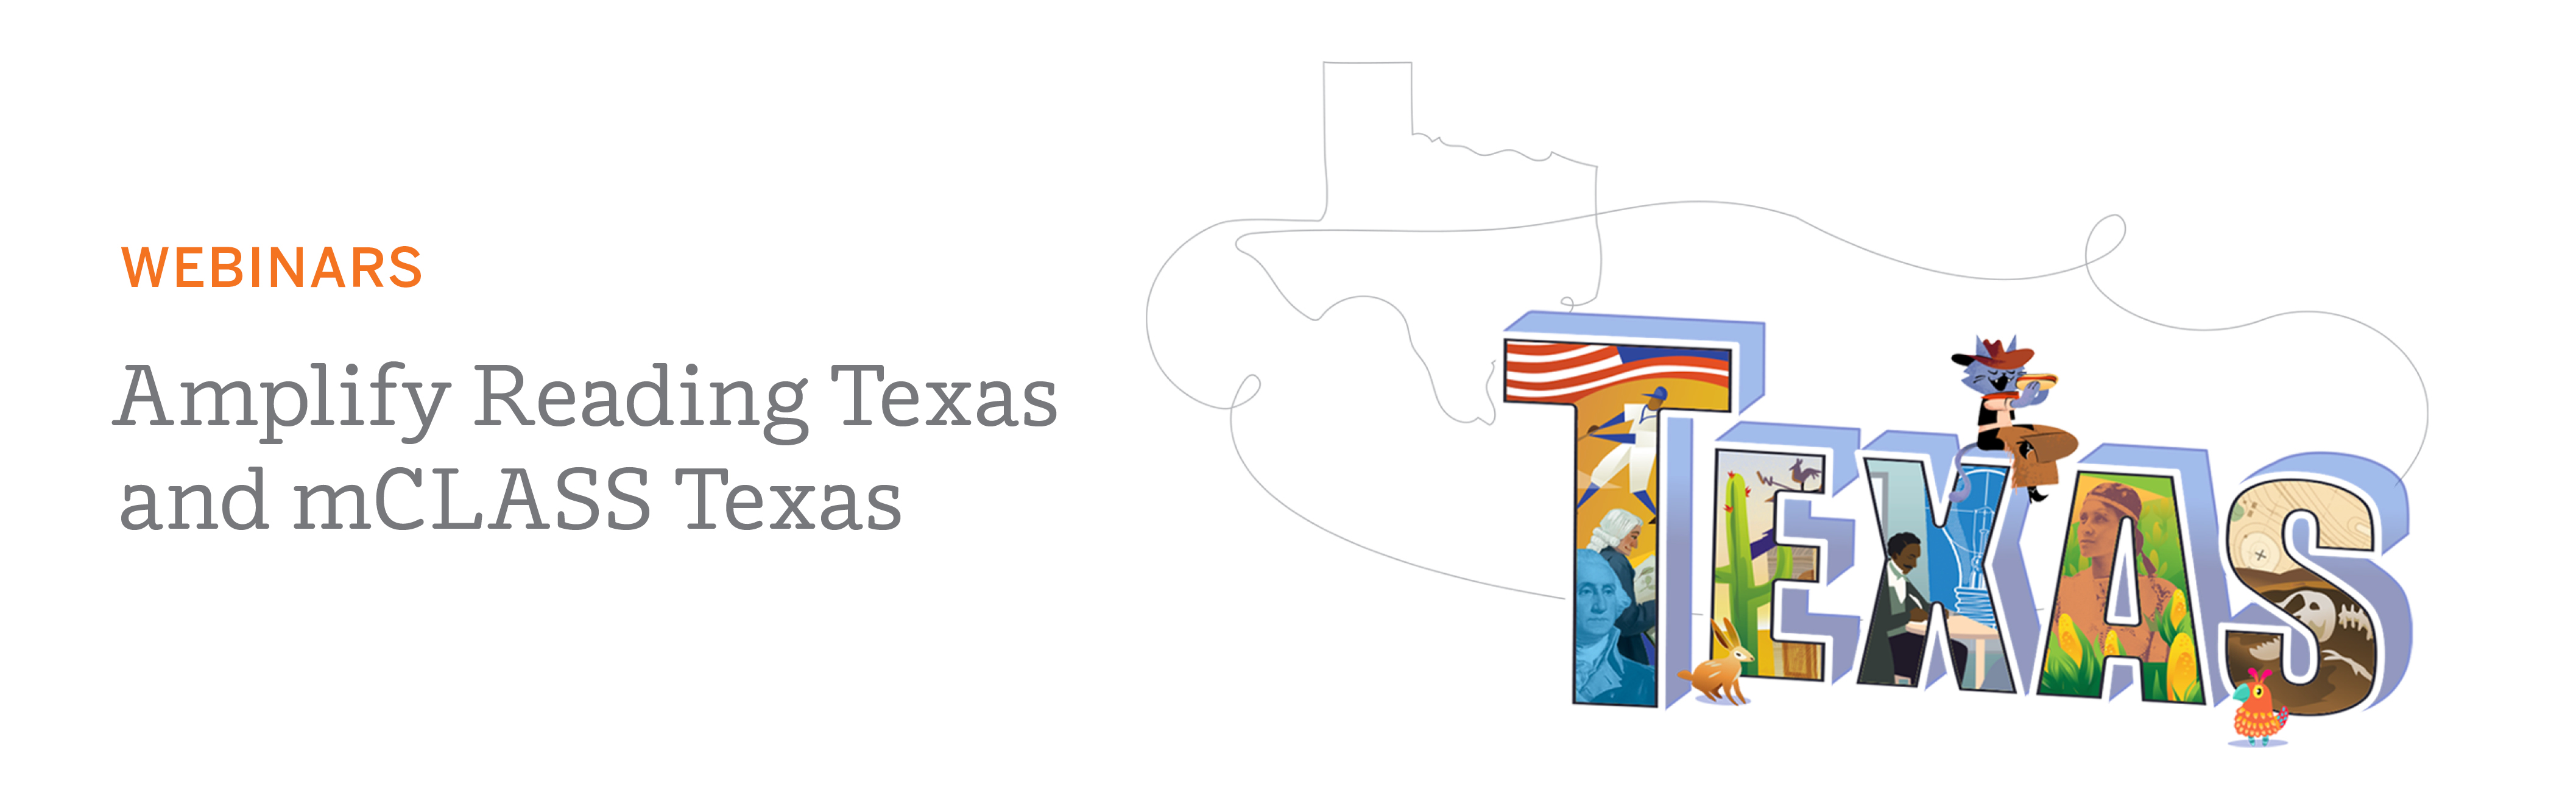 Webinars: Amplify Reading Texas and mCLASS Texas